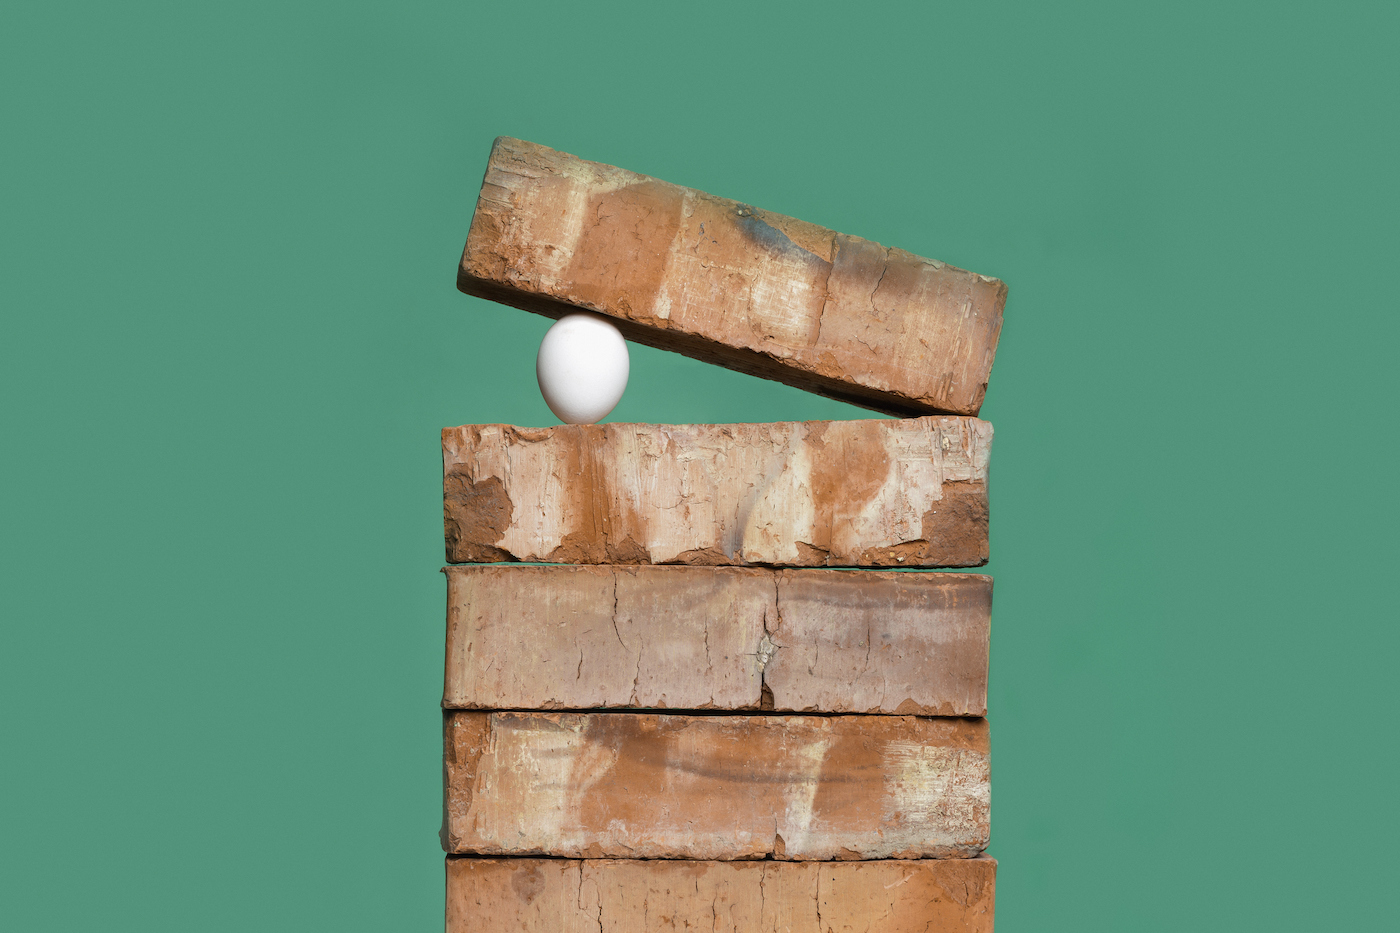 Egg between bricks on green background